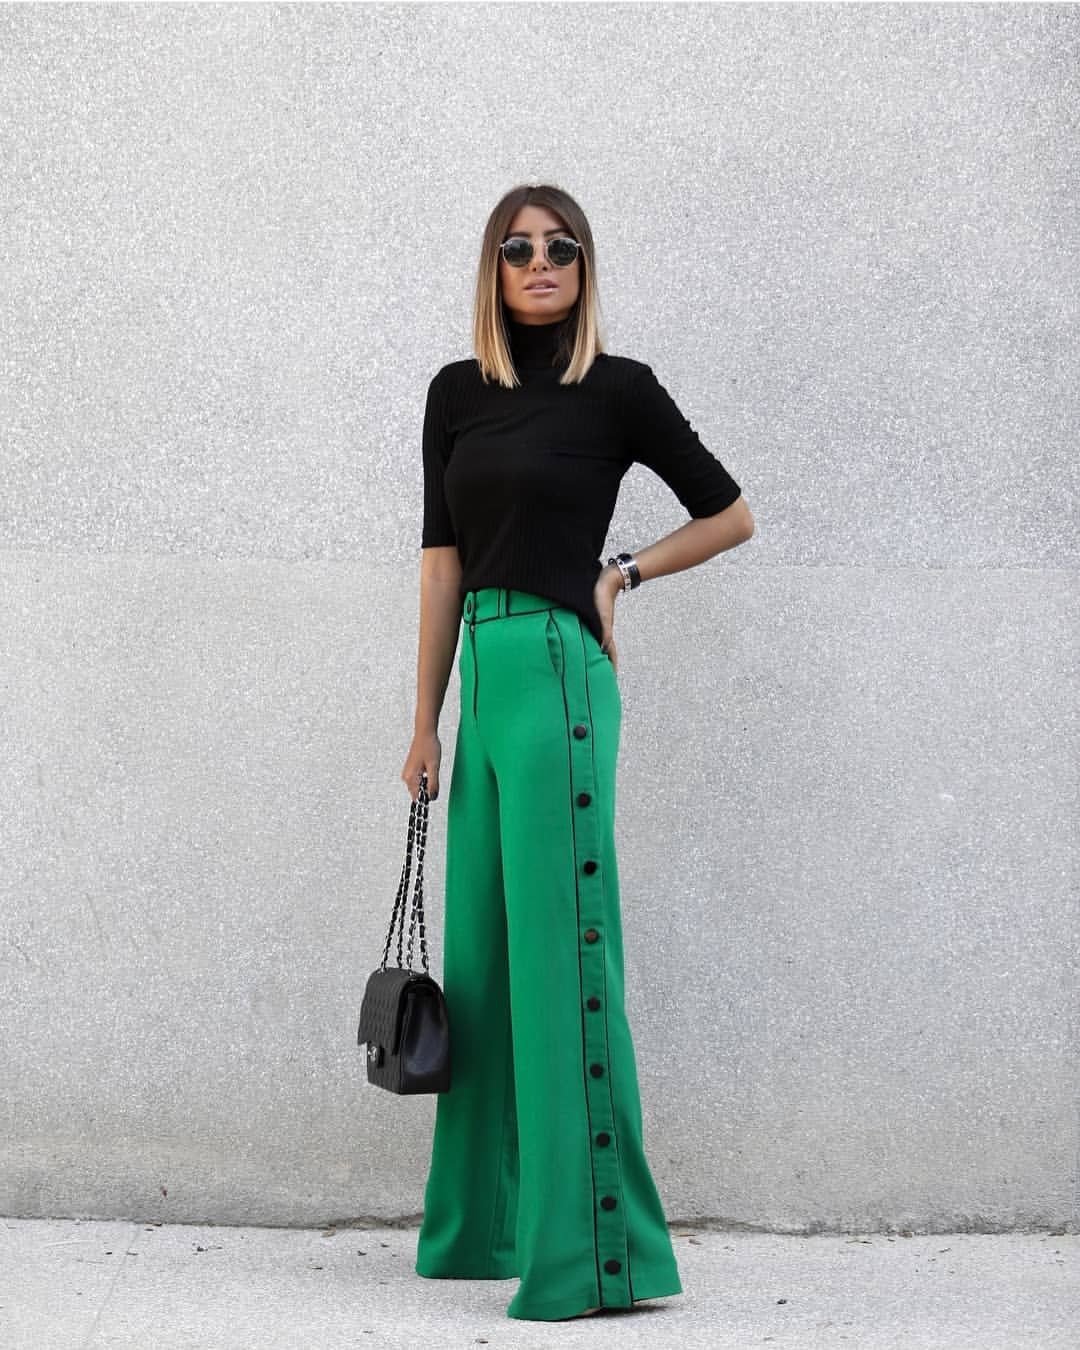 Outfits With Green Pants, Stella & Dot, Johanna Ortiz: Business casual,  Palazzo pants,  Vero Moda,  Johanna Ortiz,  Casual Outfits,  Green Pant Outfits  